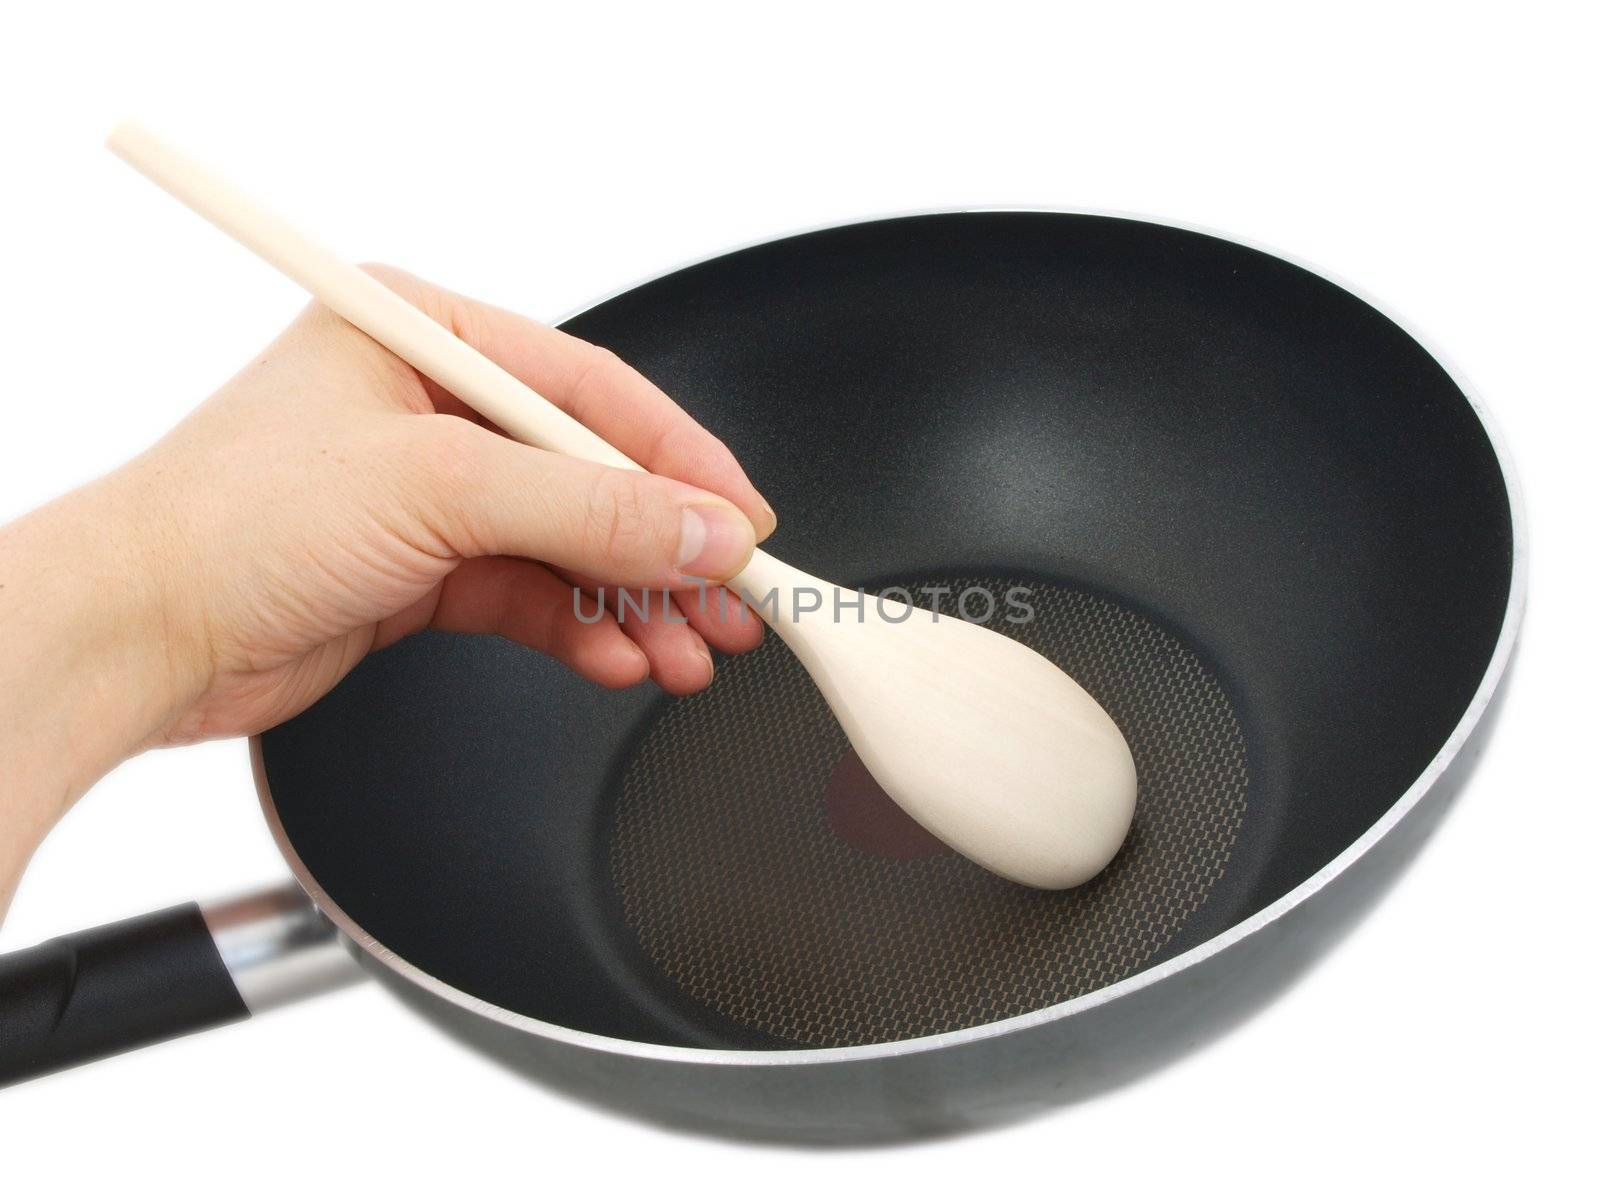 Frying pan by Arvebettum